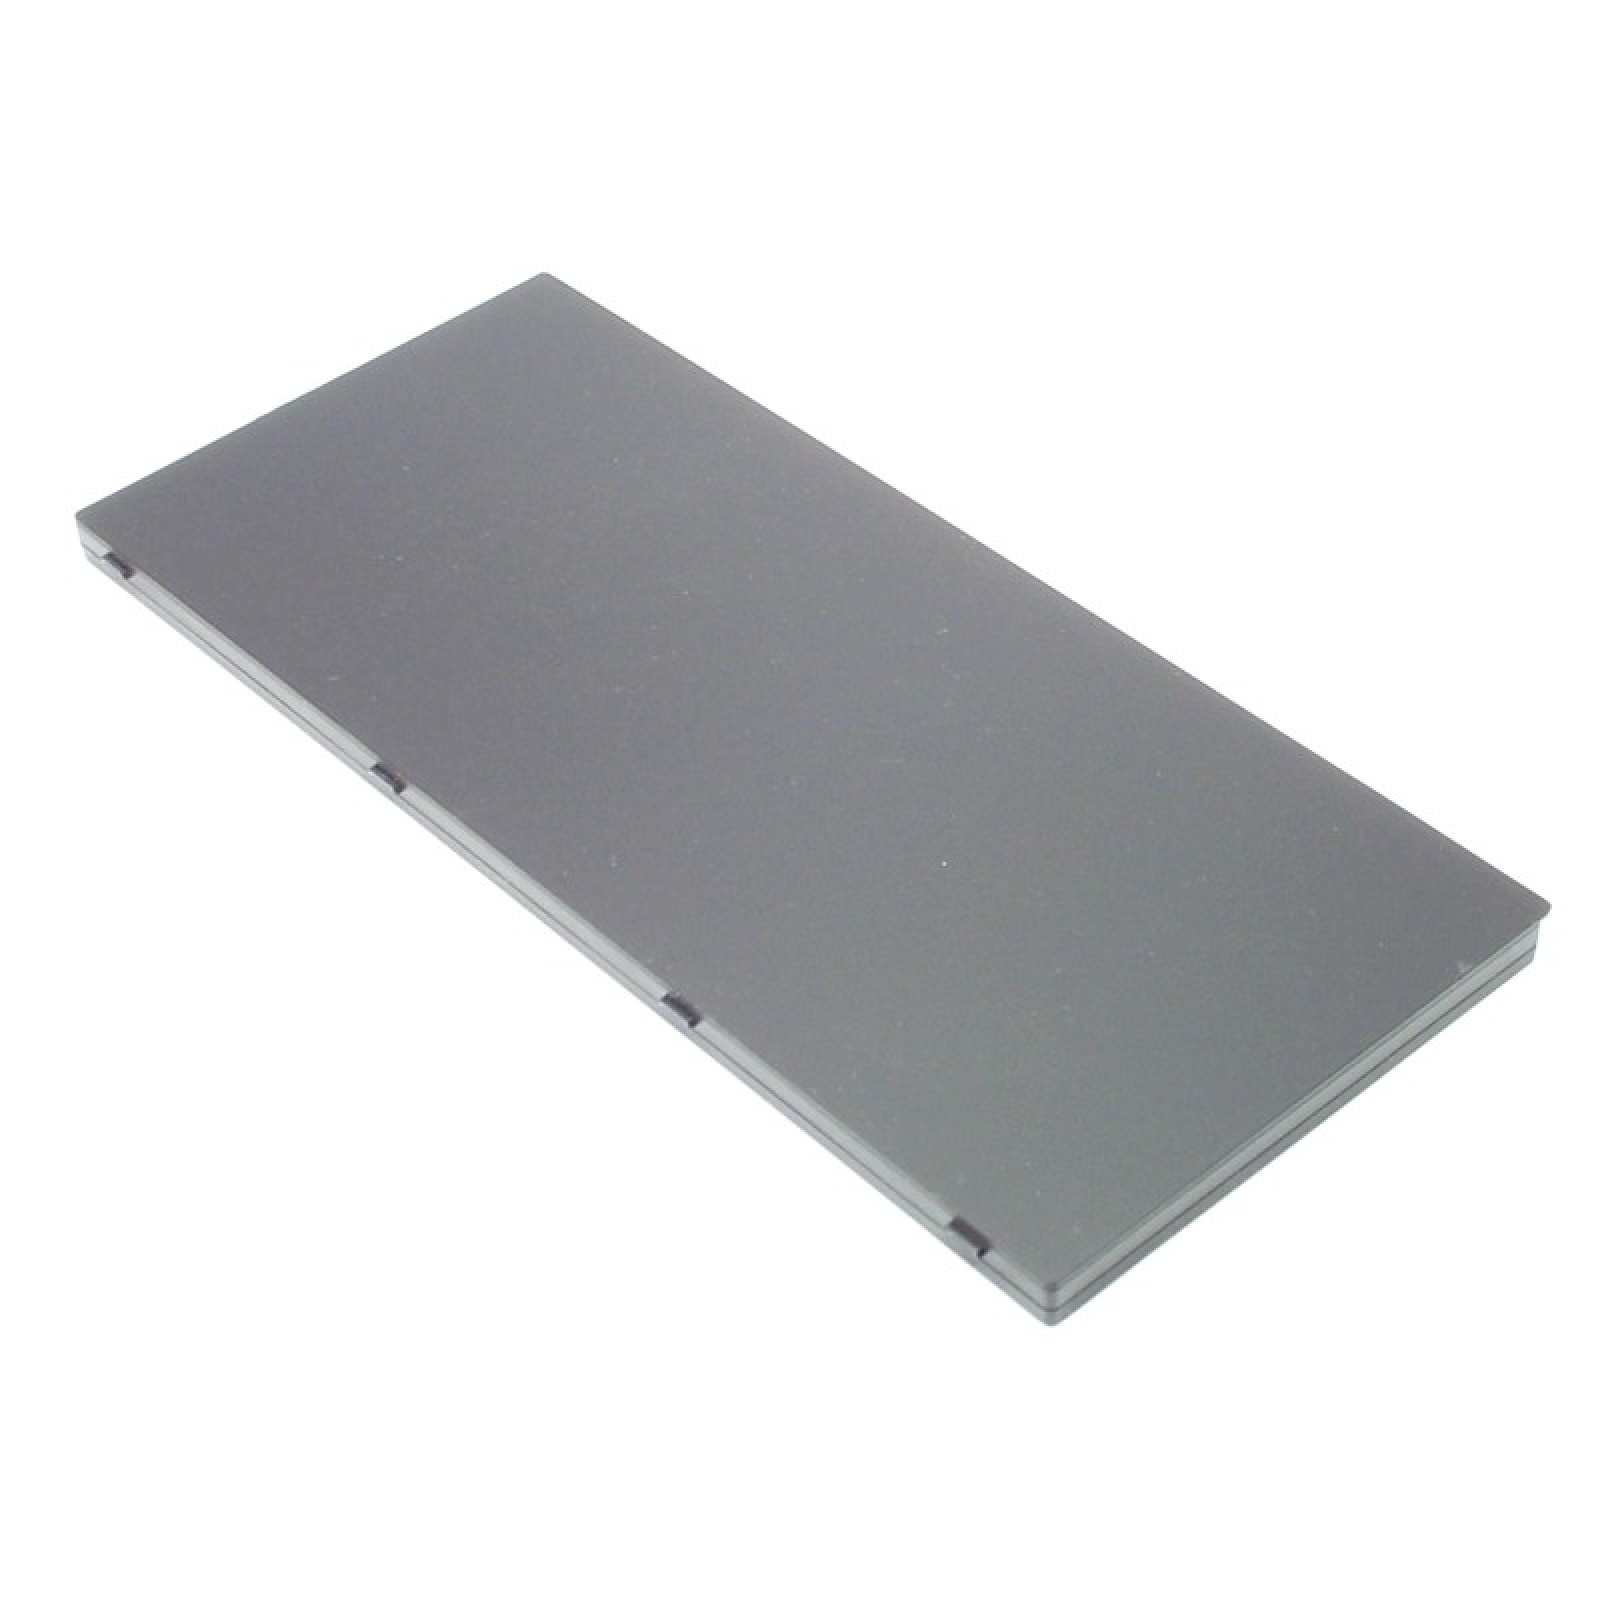 14.8V, für 2800 LiPolymer, mAh Volt, Notebook-Akku, 2800mAh HP ProBook (LiPoly) MTXTEC 14.8 Akku 5310m Lithium-Polymer